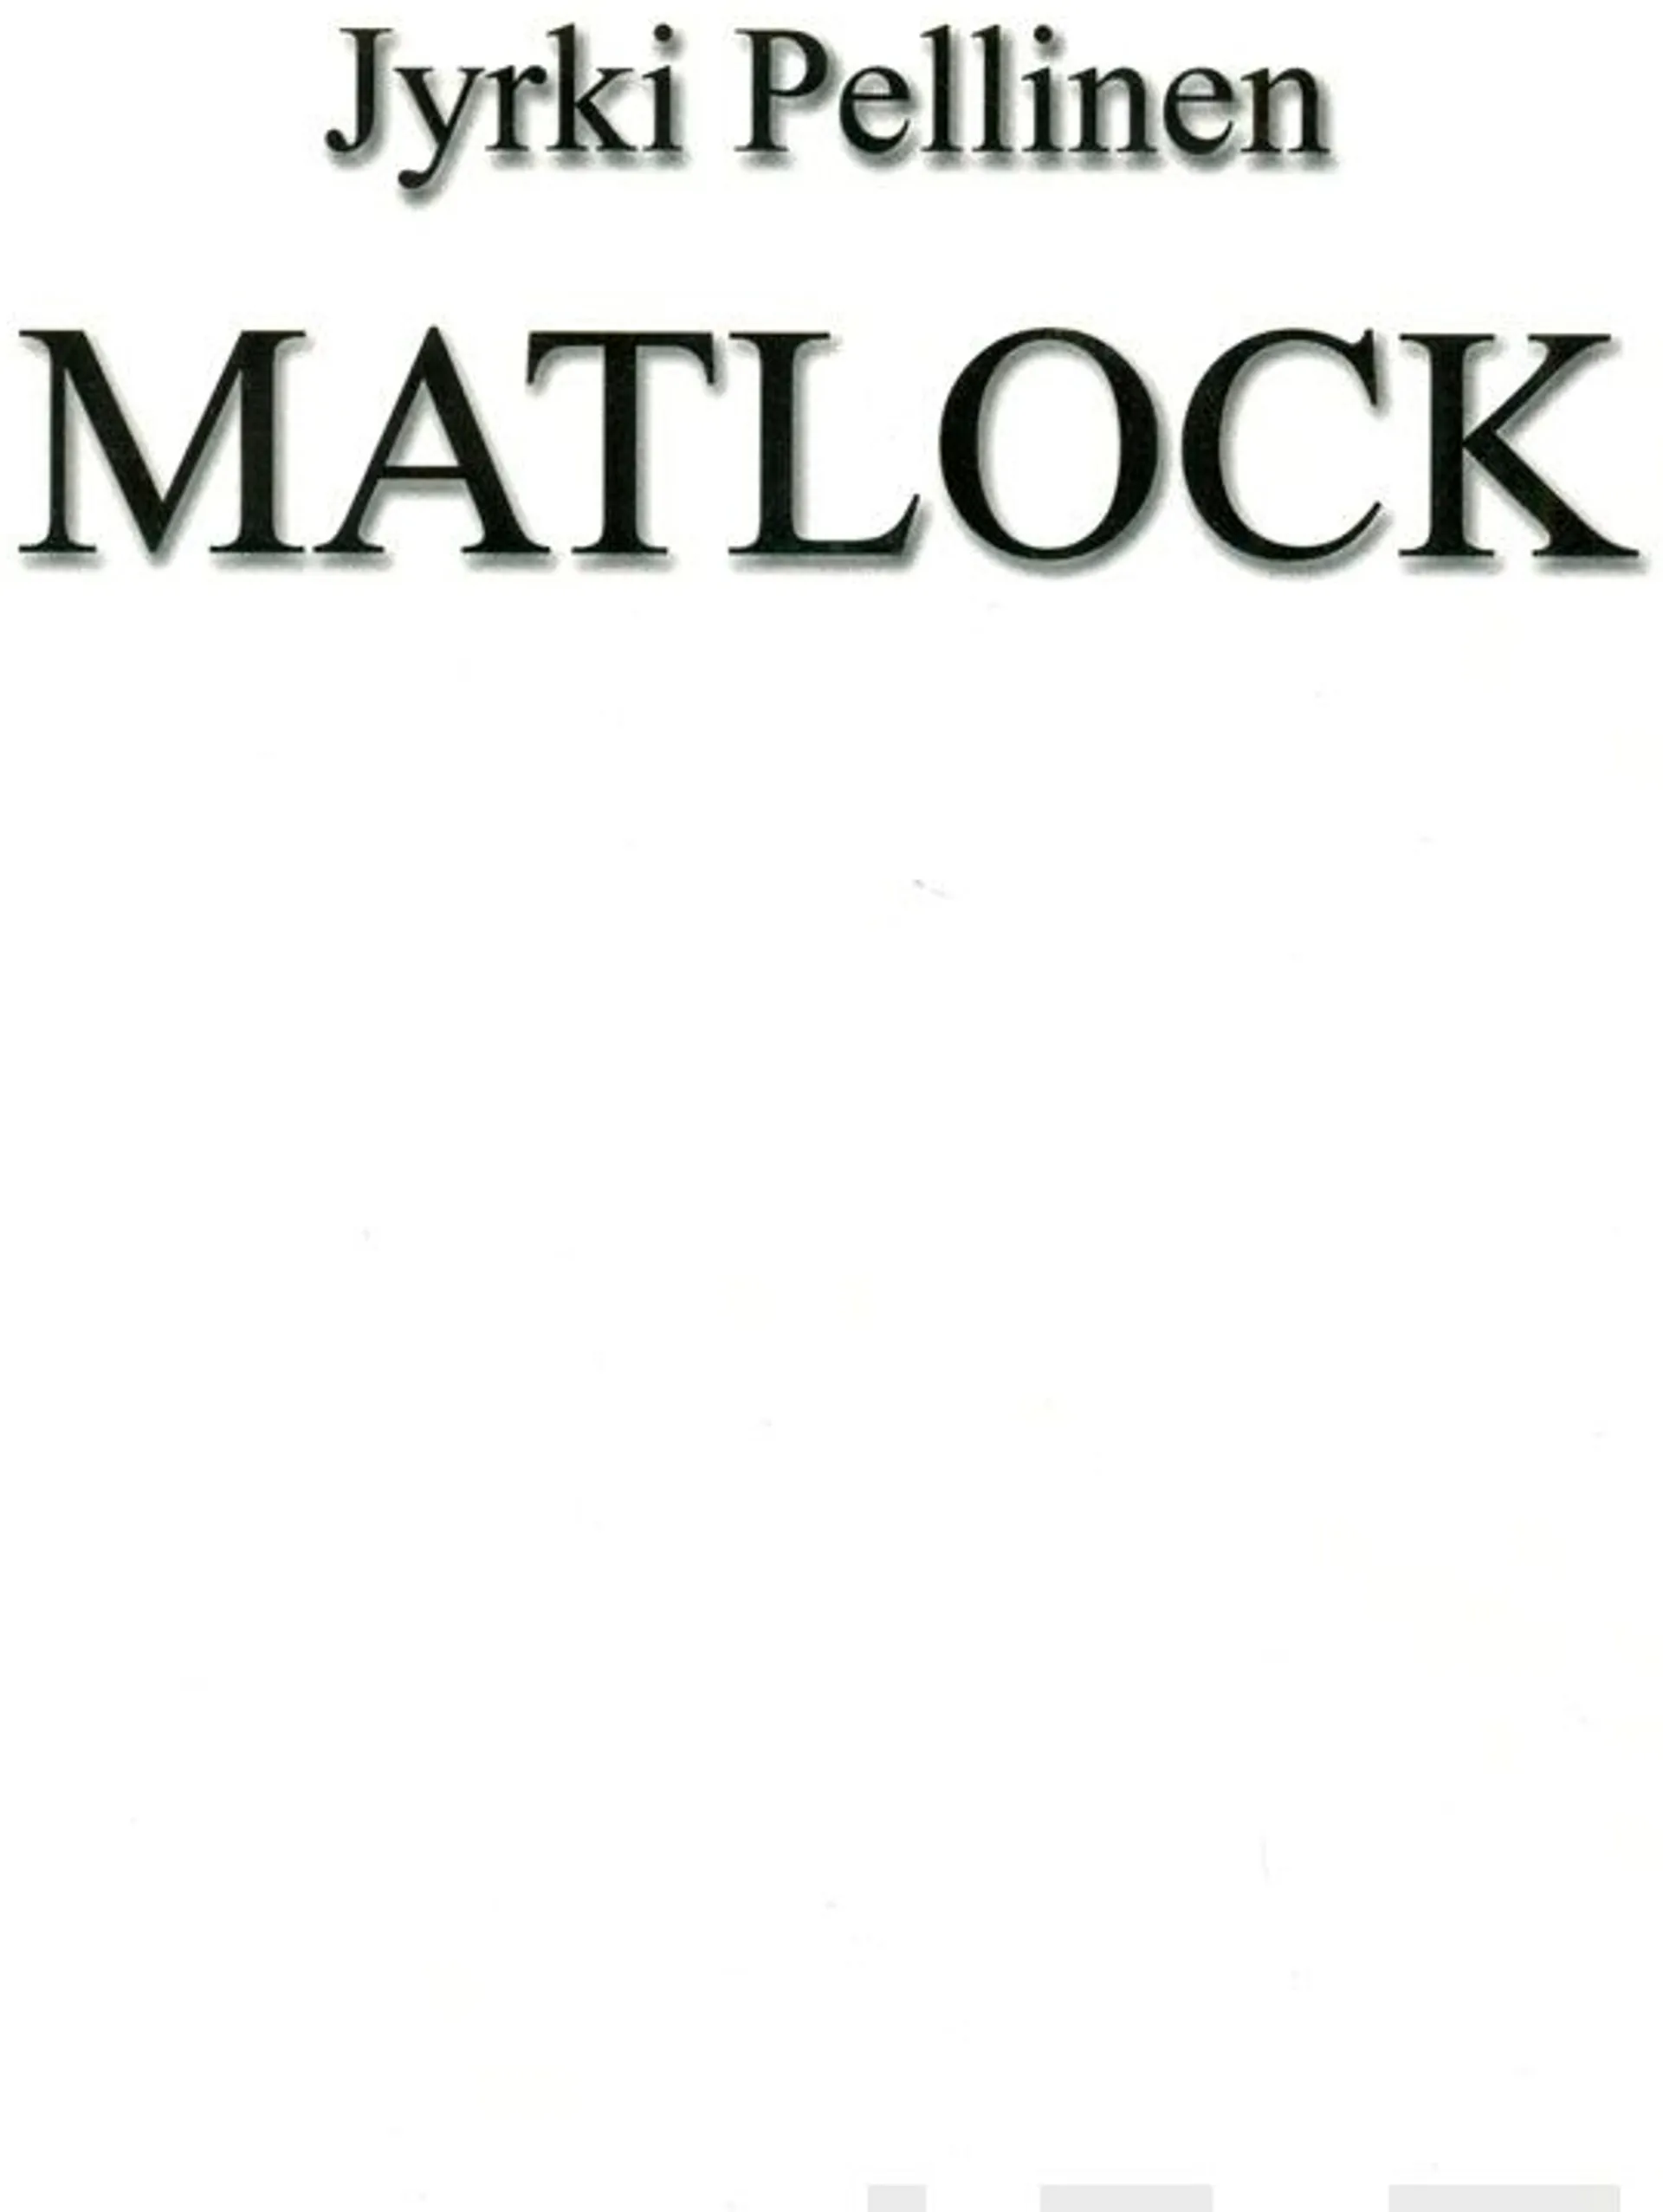 Pellinen, Matlock